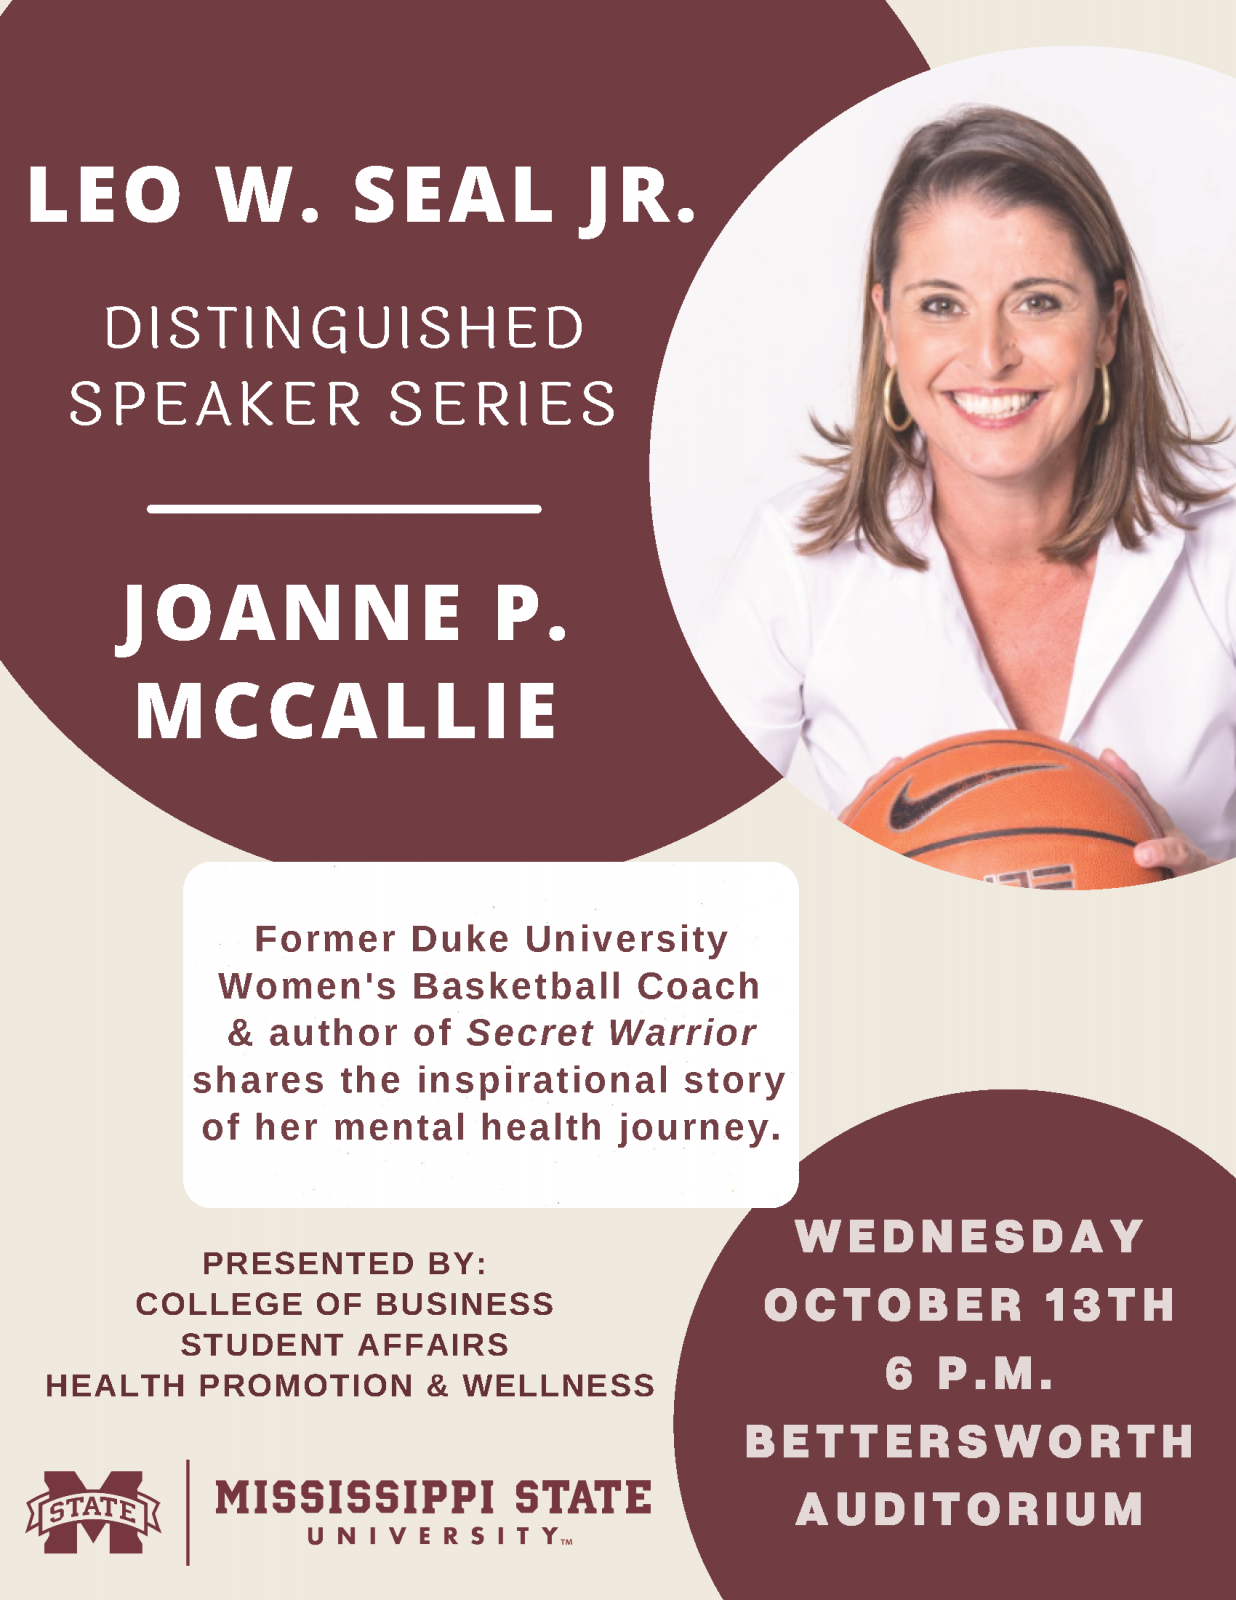 Leo W. Seal Jr. Distinguished Speaker Series: Joanne P. McCallie